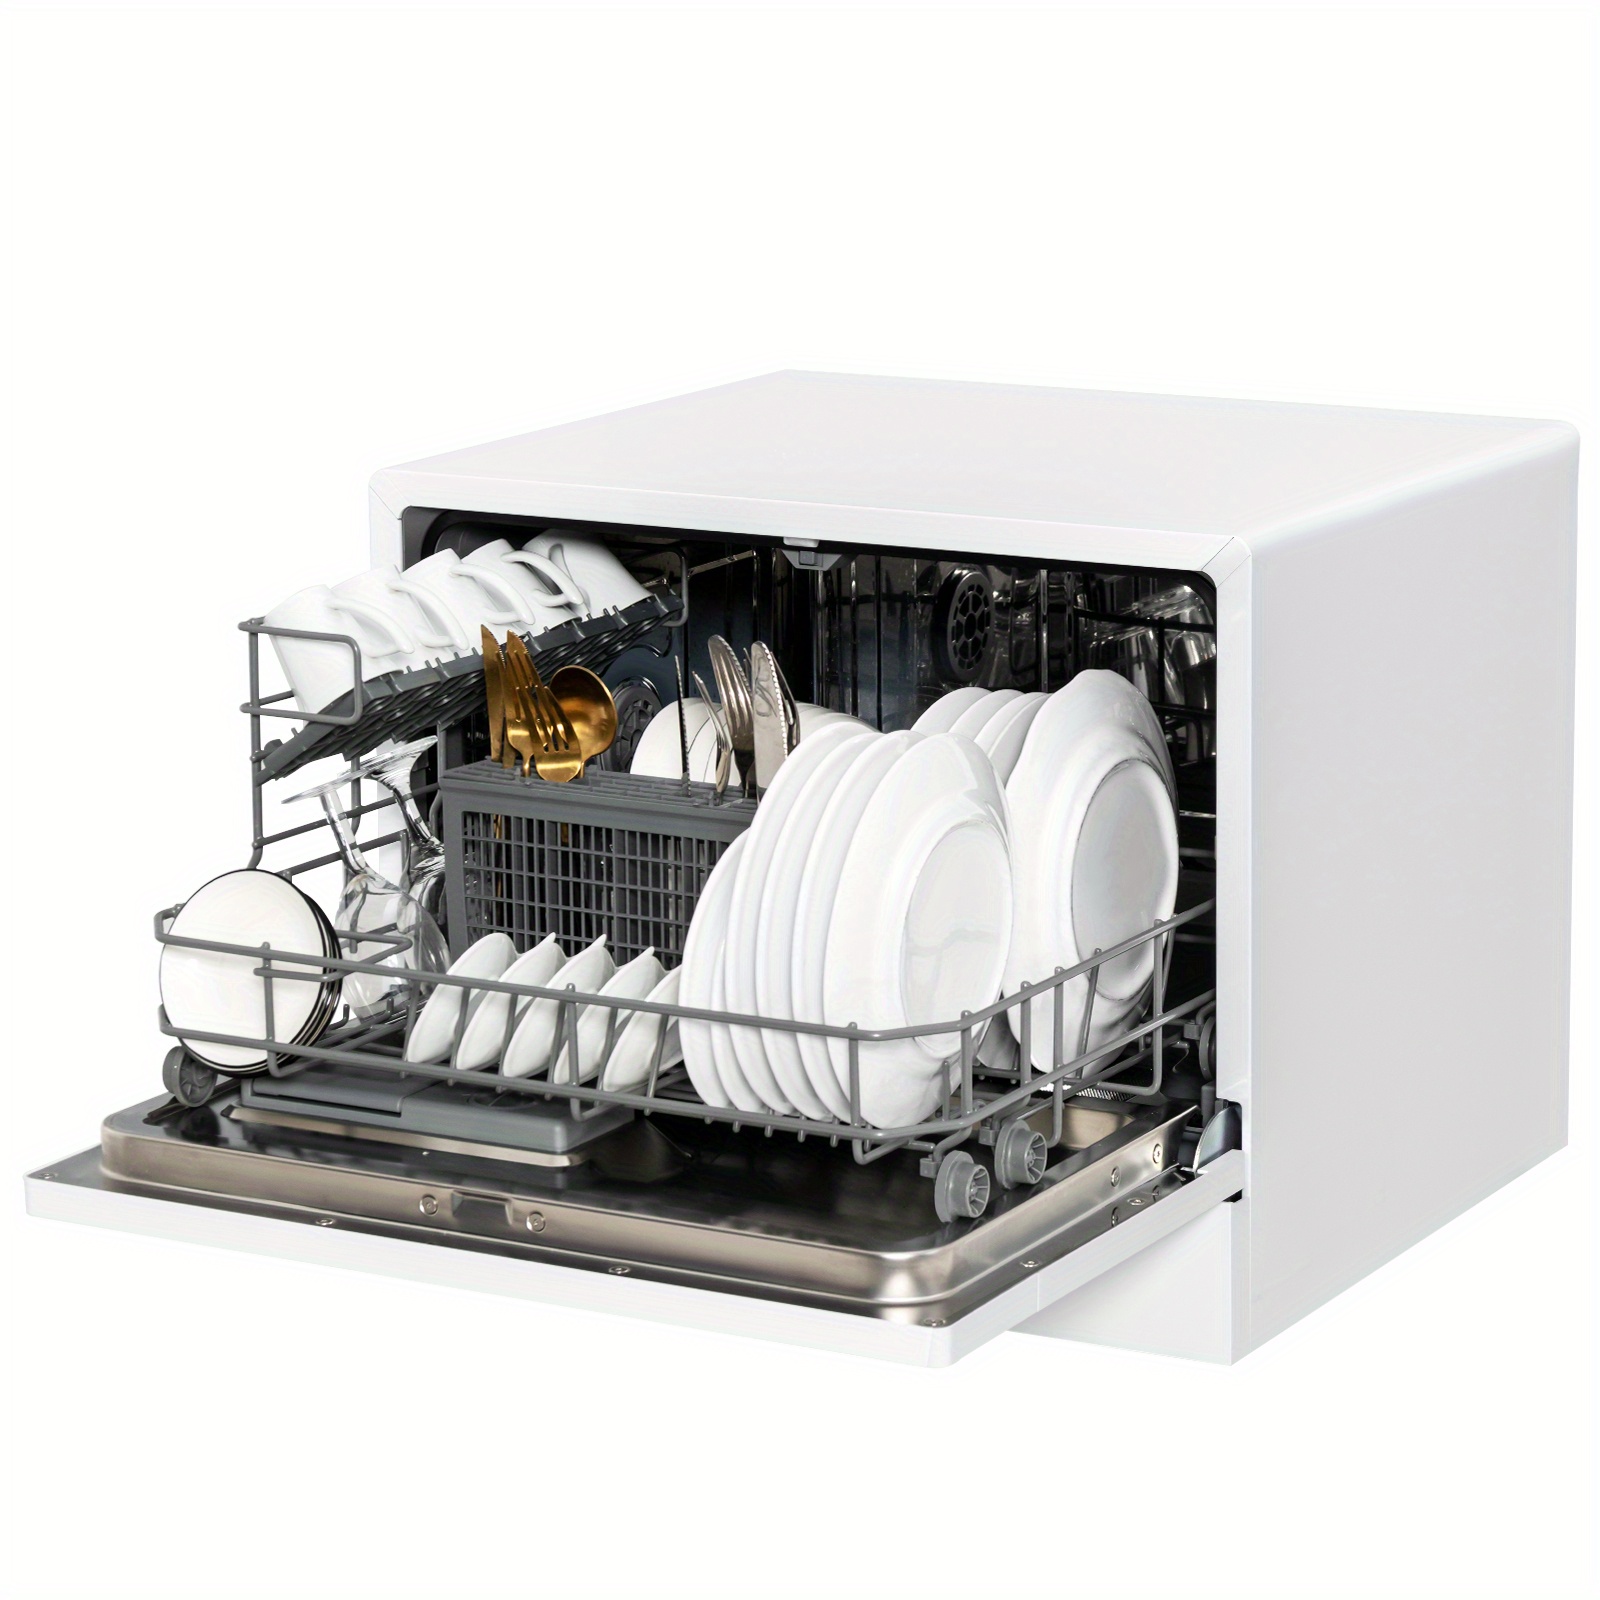 

Lifezeal Compact Countertop Dishwasher 6 Place Settings W/ 5 Washing Programs & 24h Timer